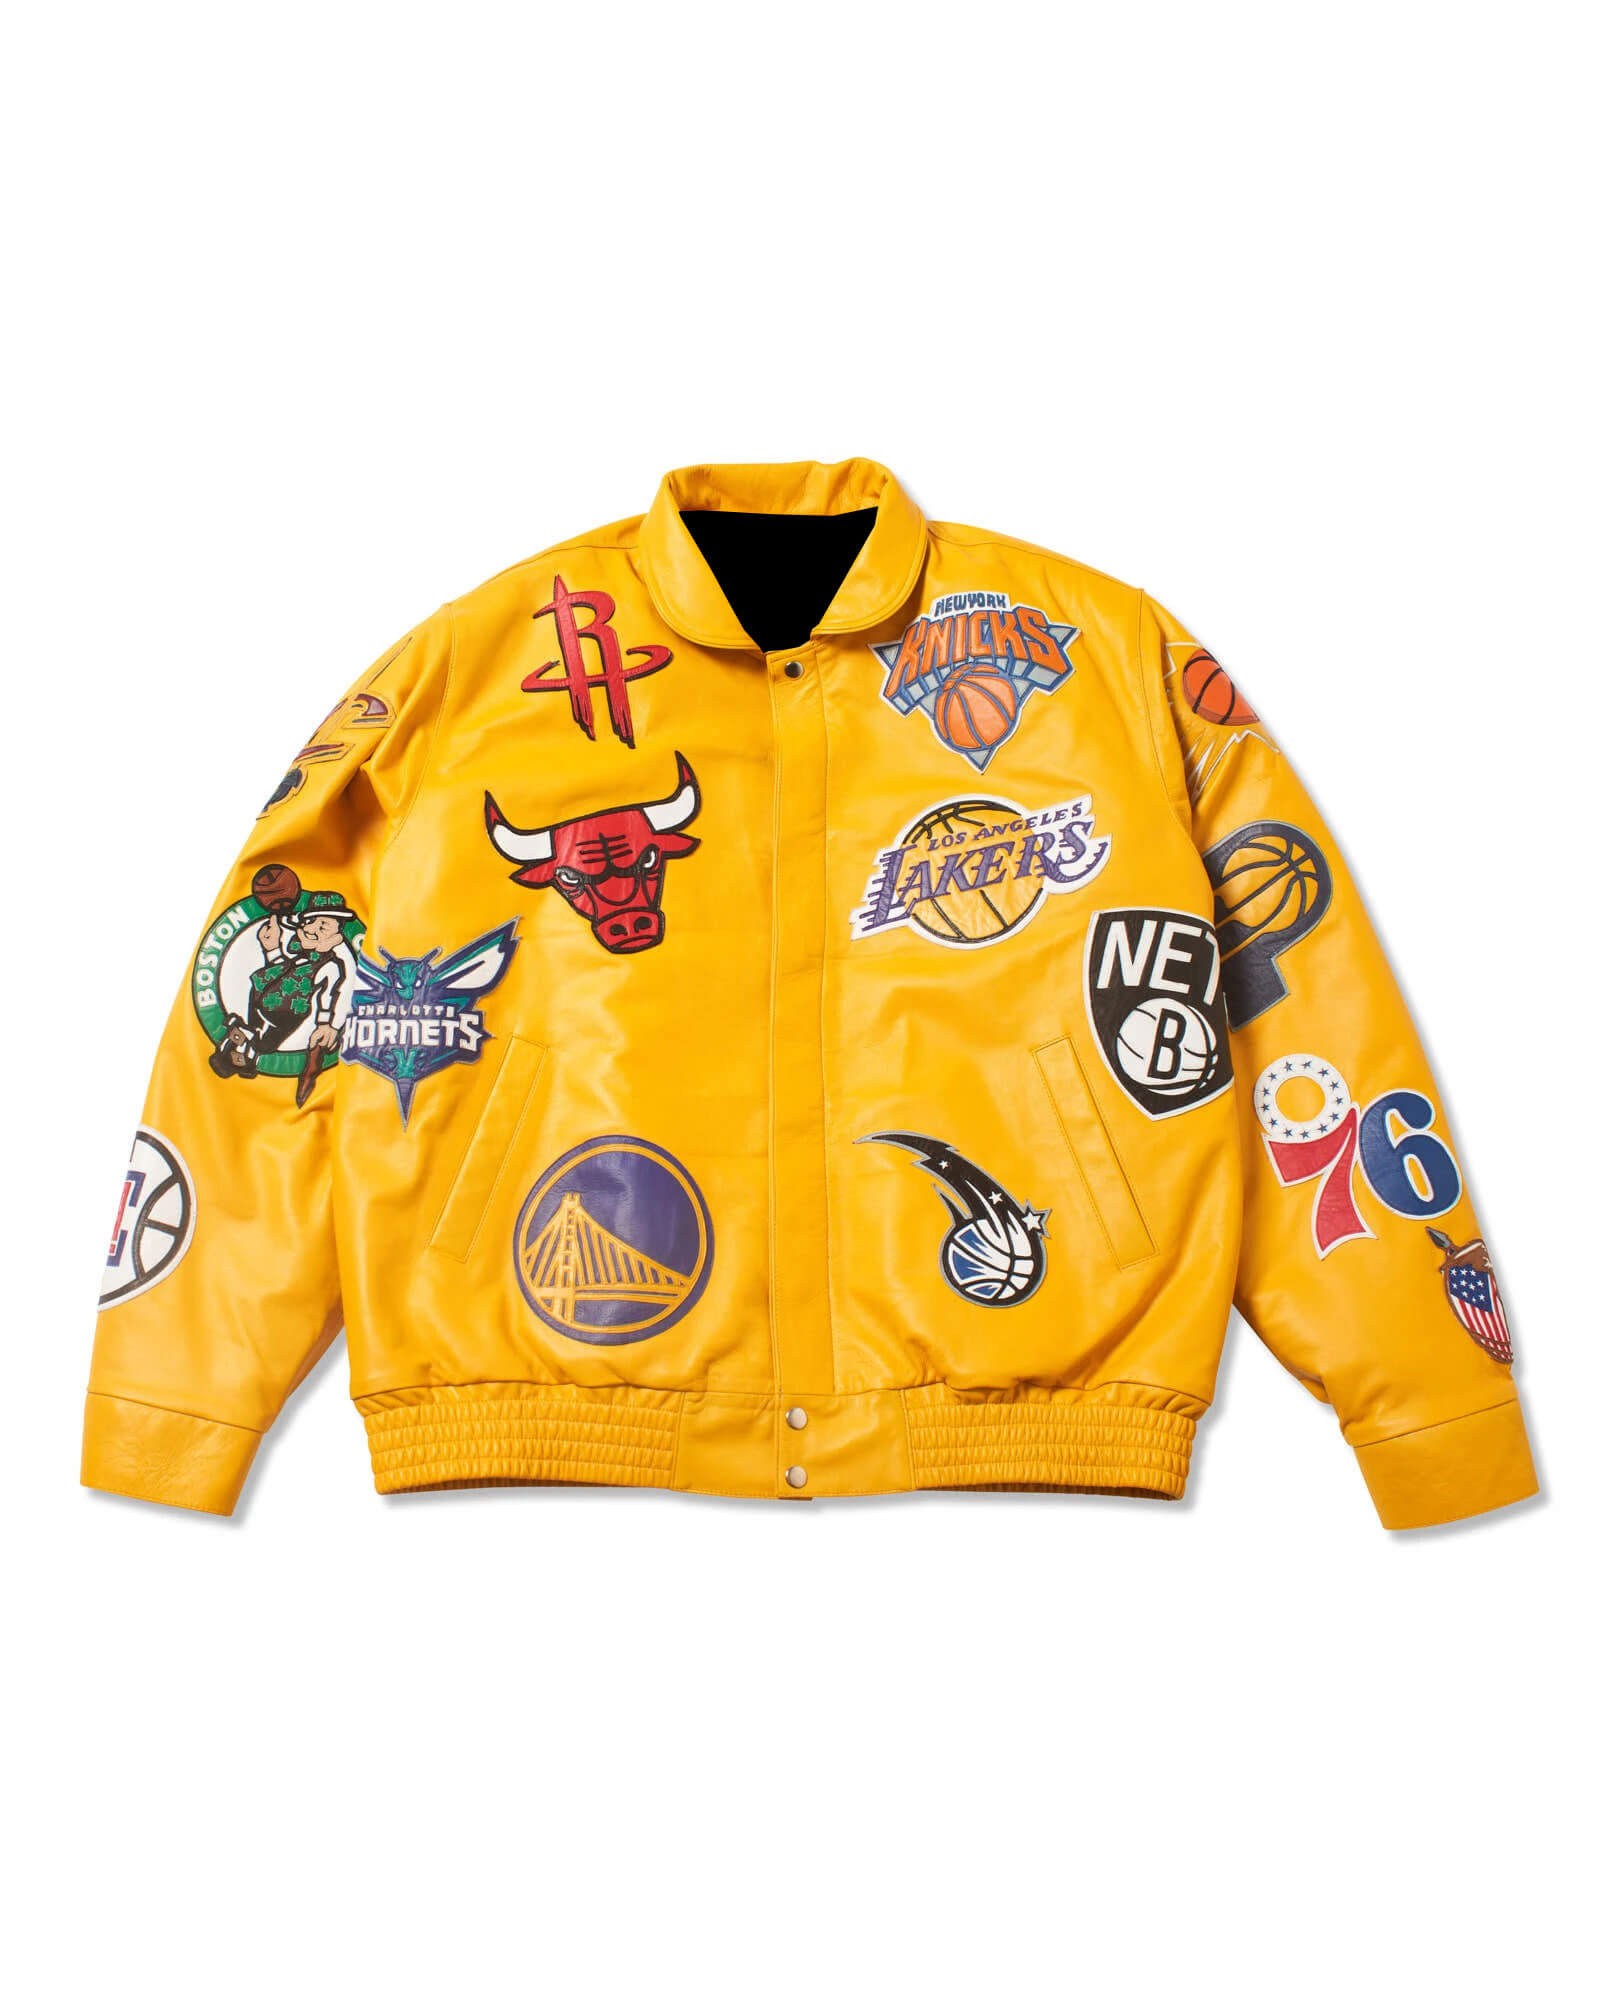 Maker of Jacket Men's NBA Teams Collage Jeff Hamilton Leather Jacket